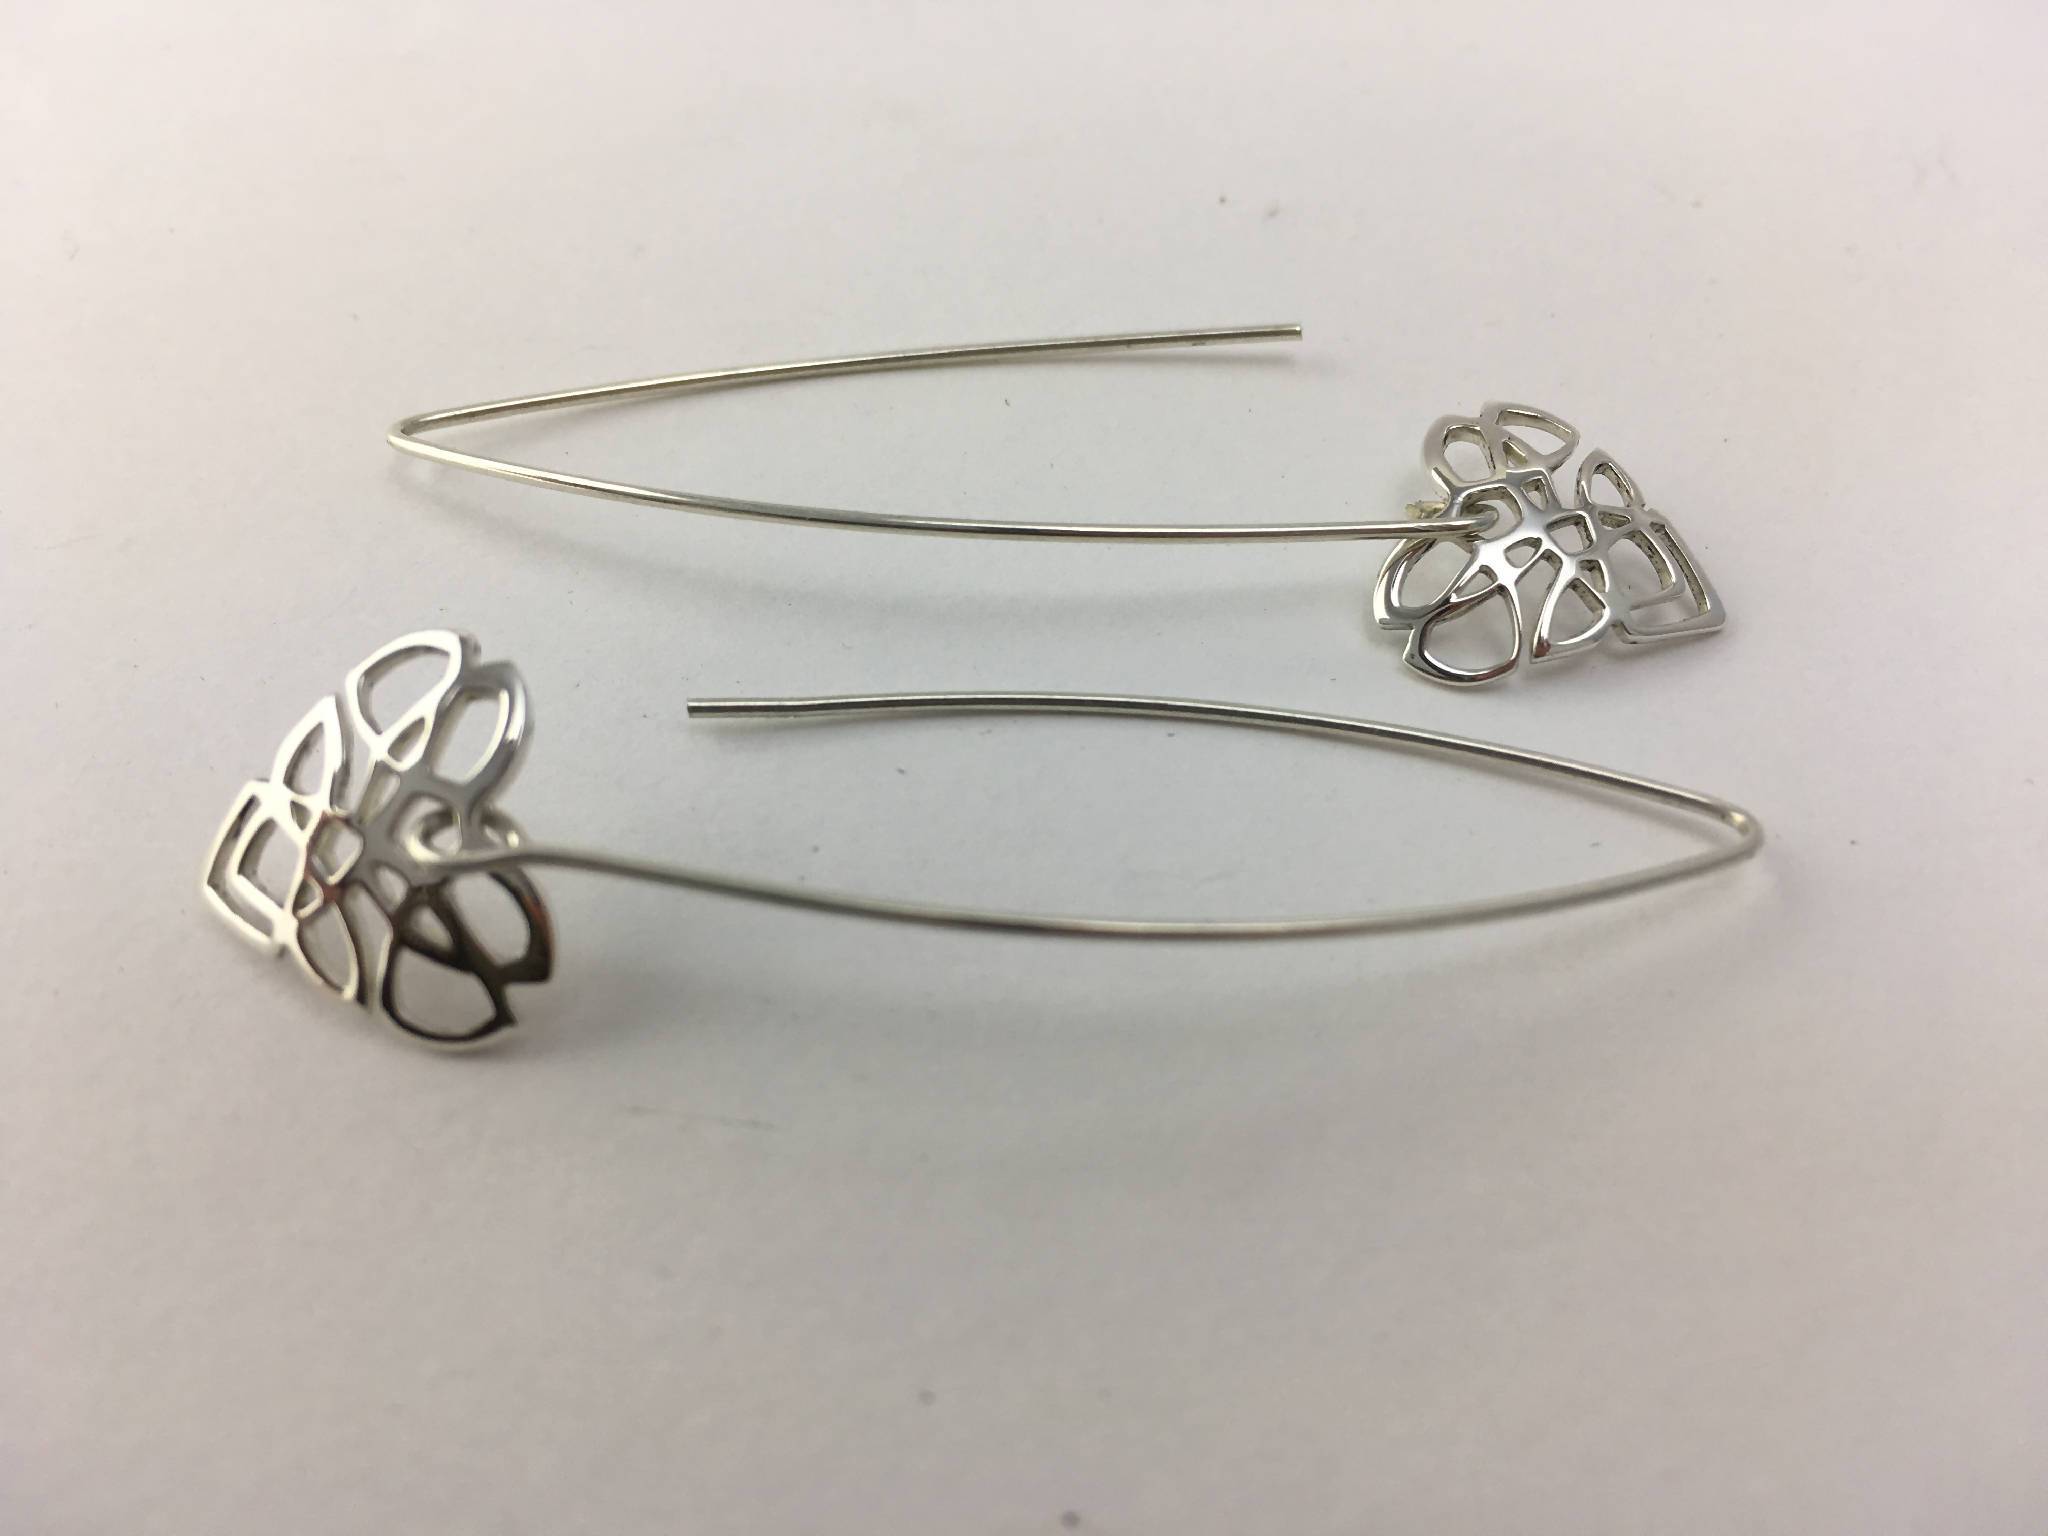 Full Celtic knot design heart shaped long drop earrings